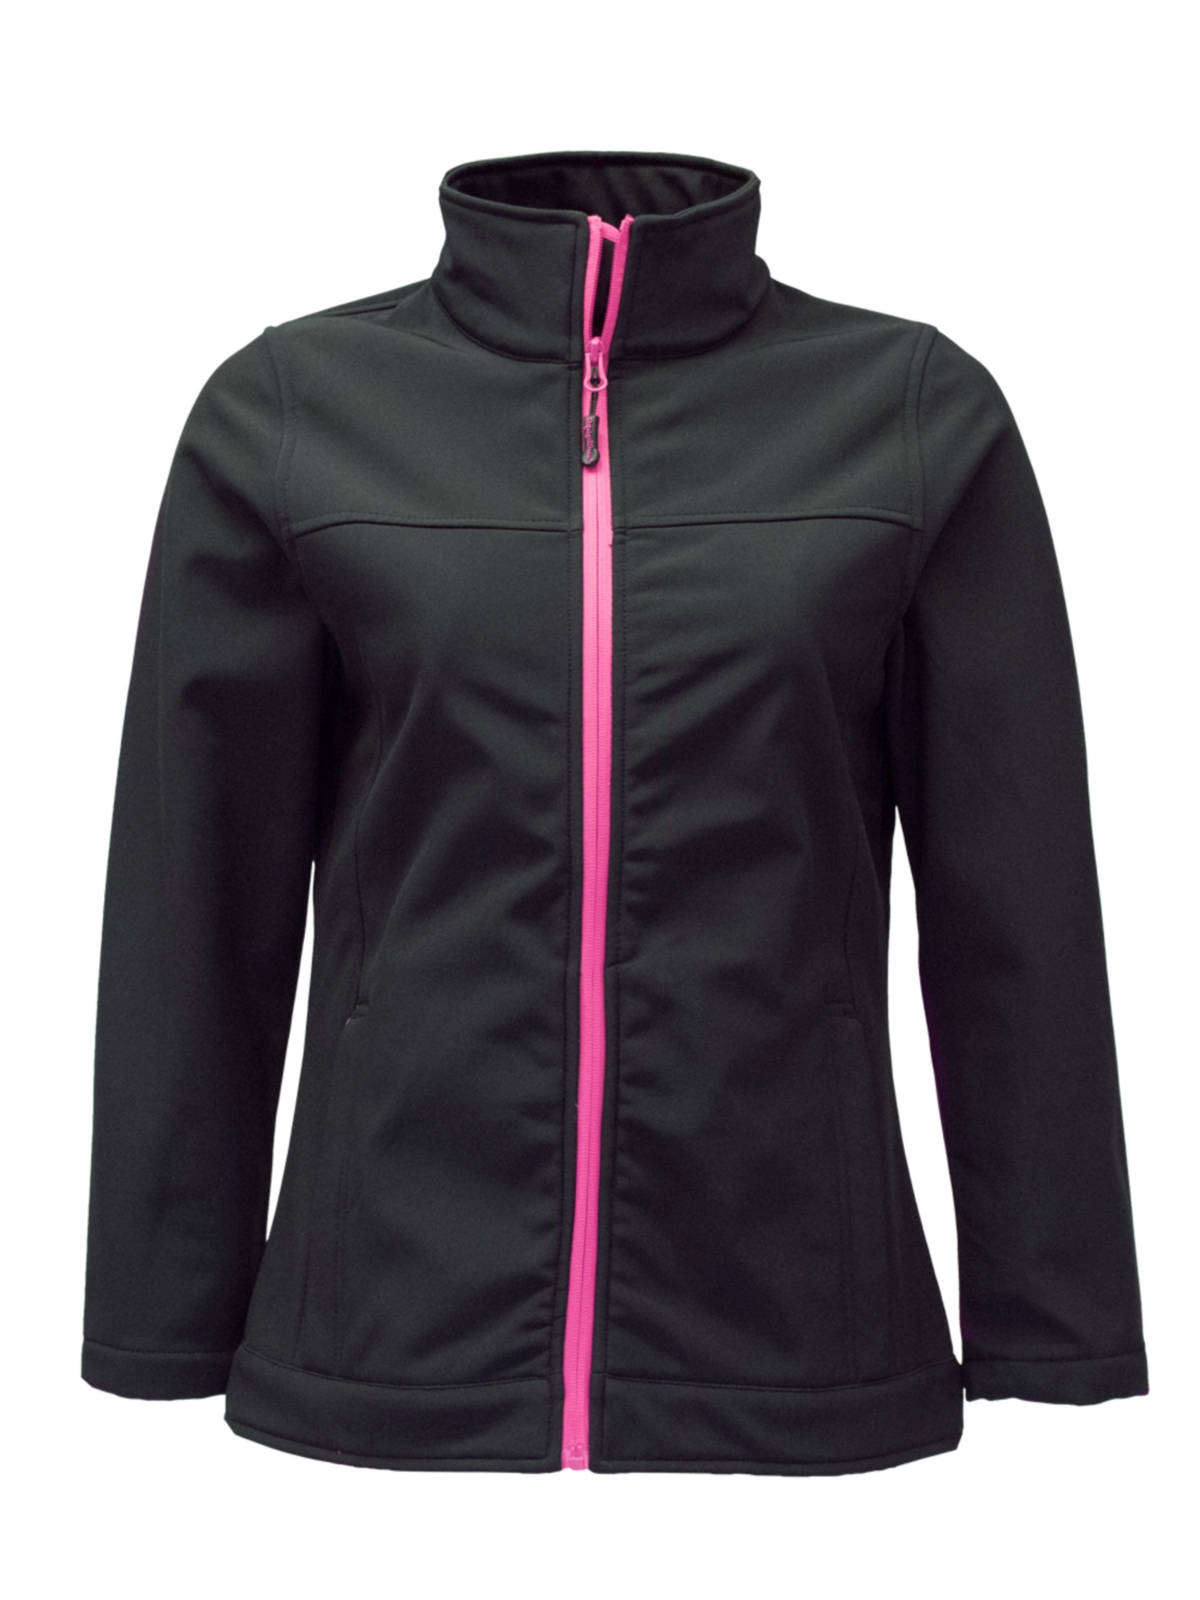 Women's Warm Softshell Jacket Full Zip with Micro Fleece Lining - Black